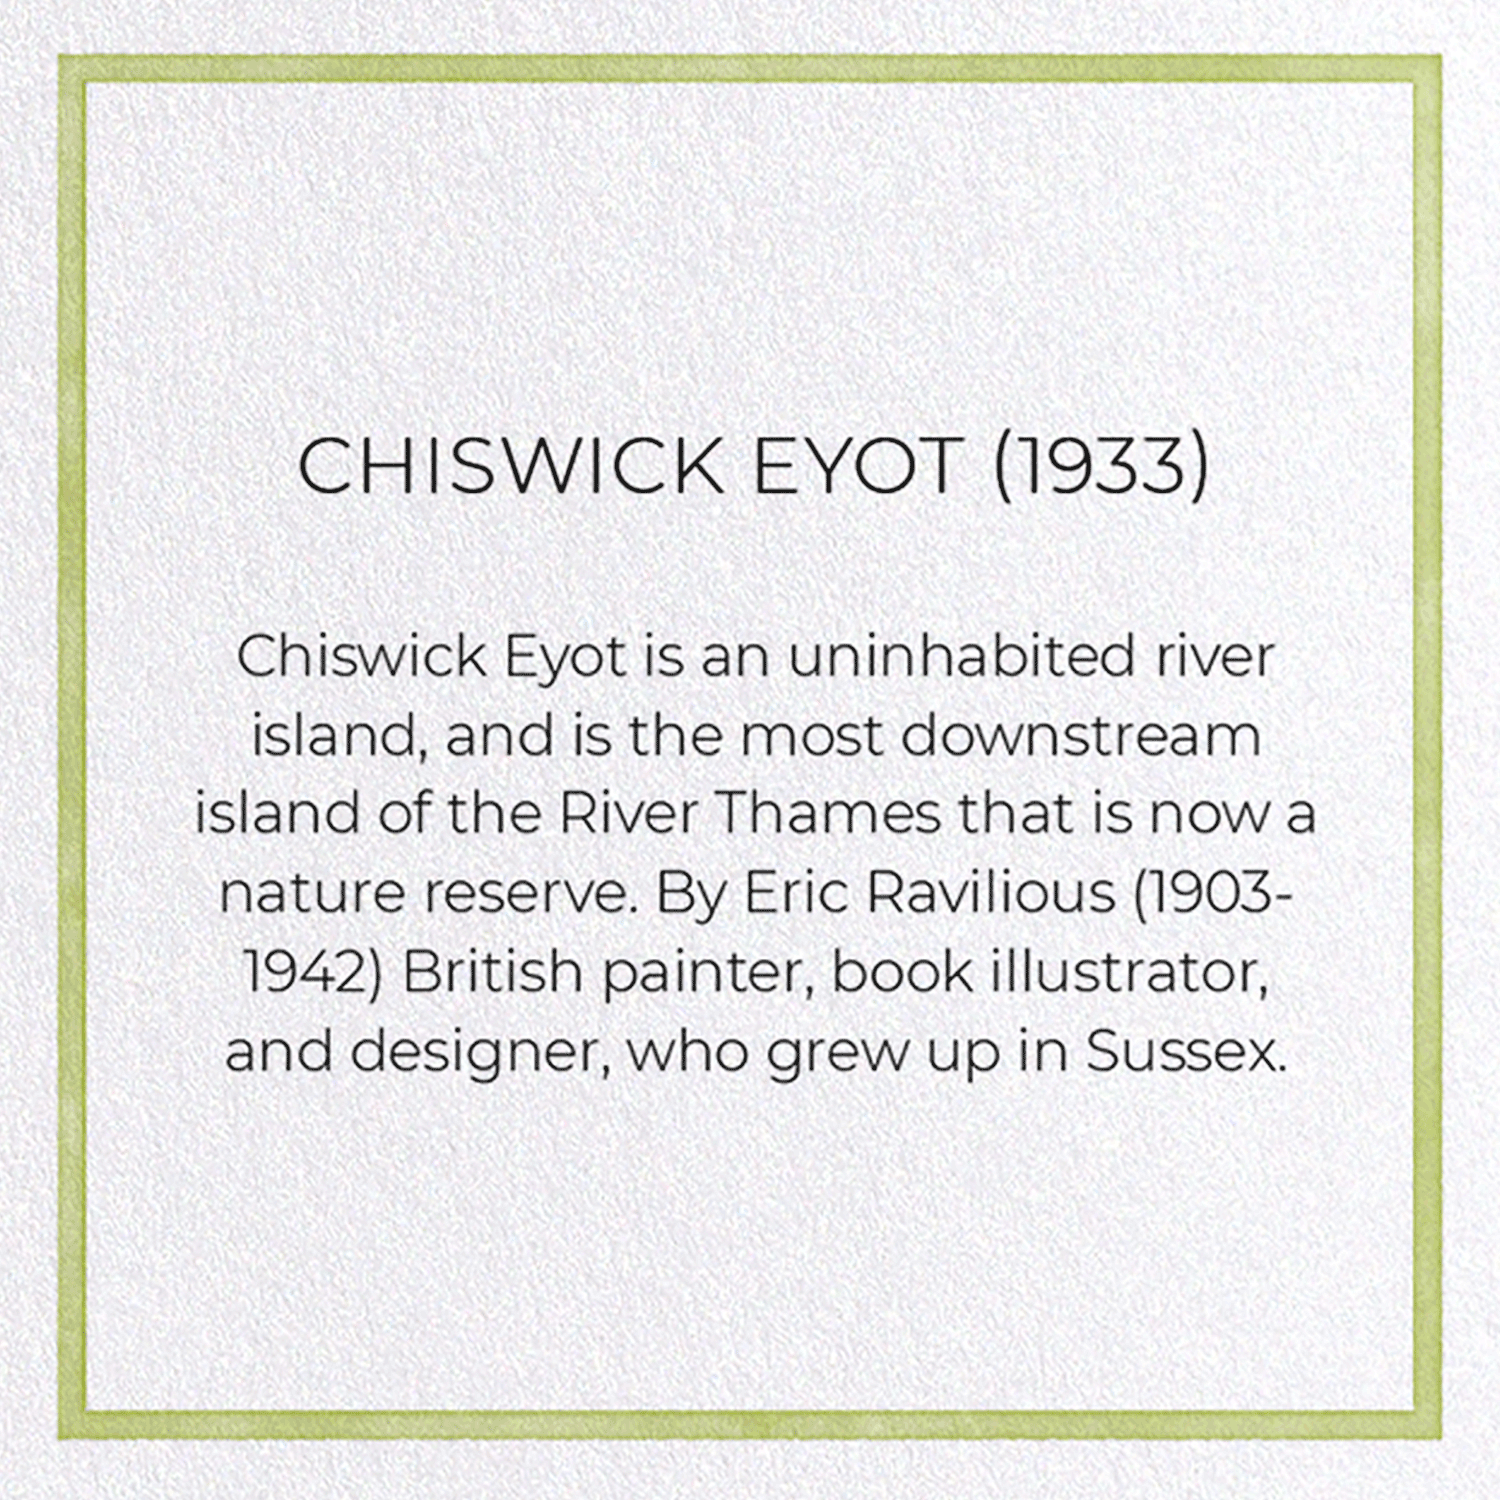 CHISWICK EYOT (1933)